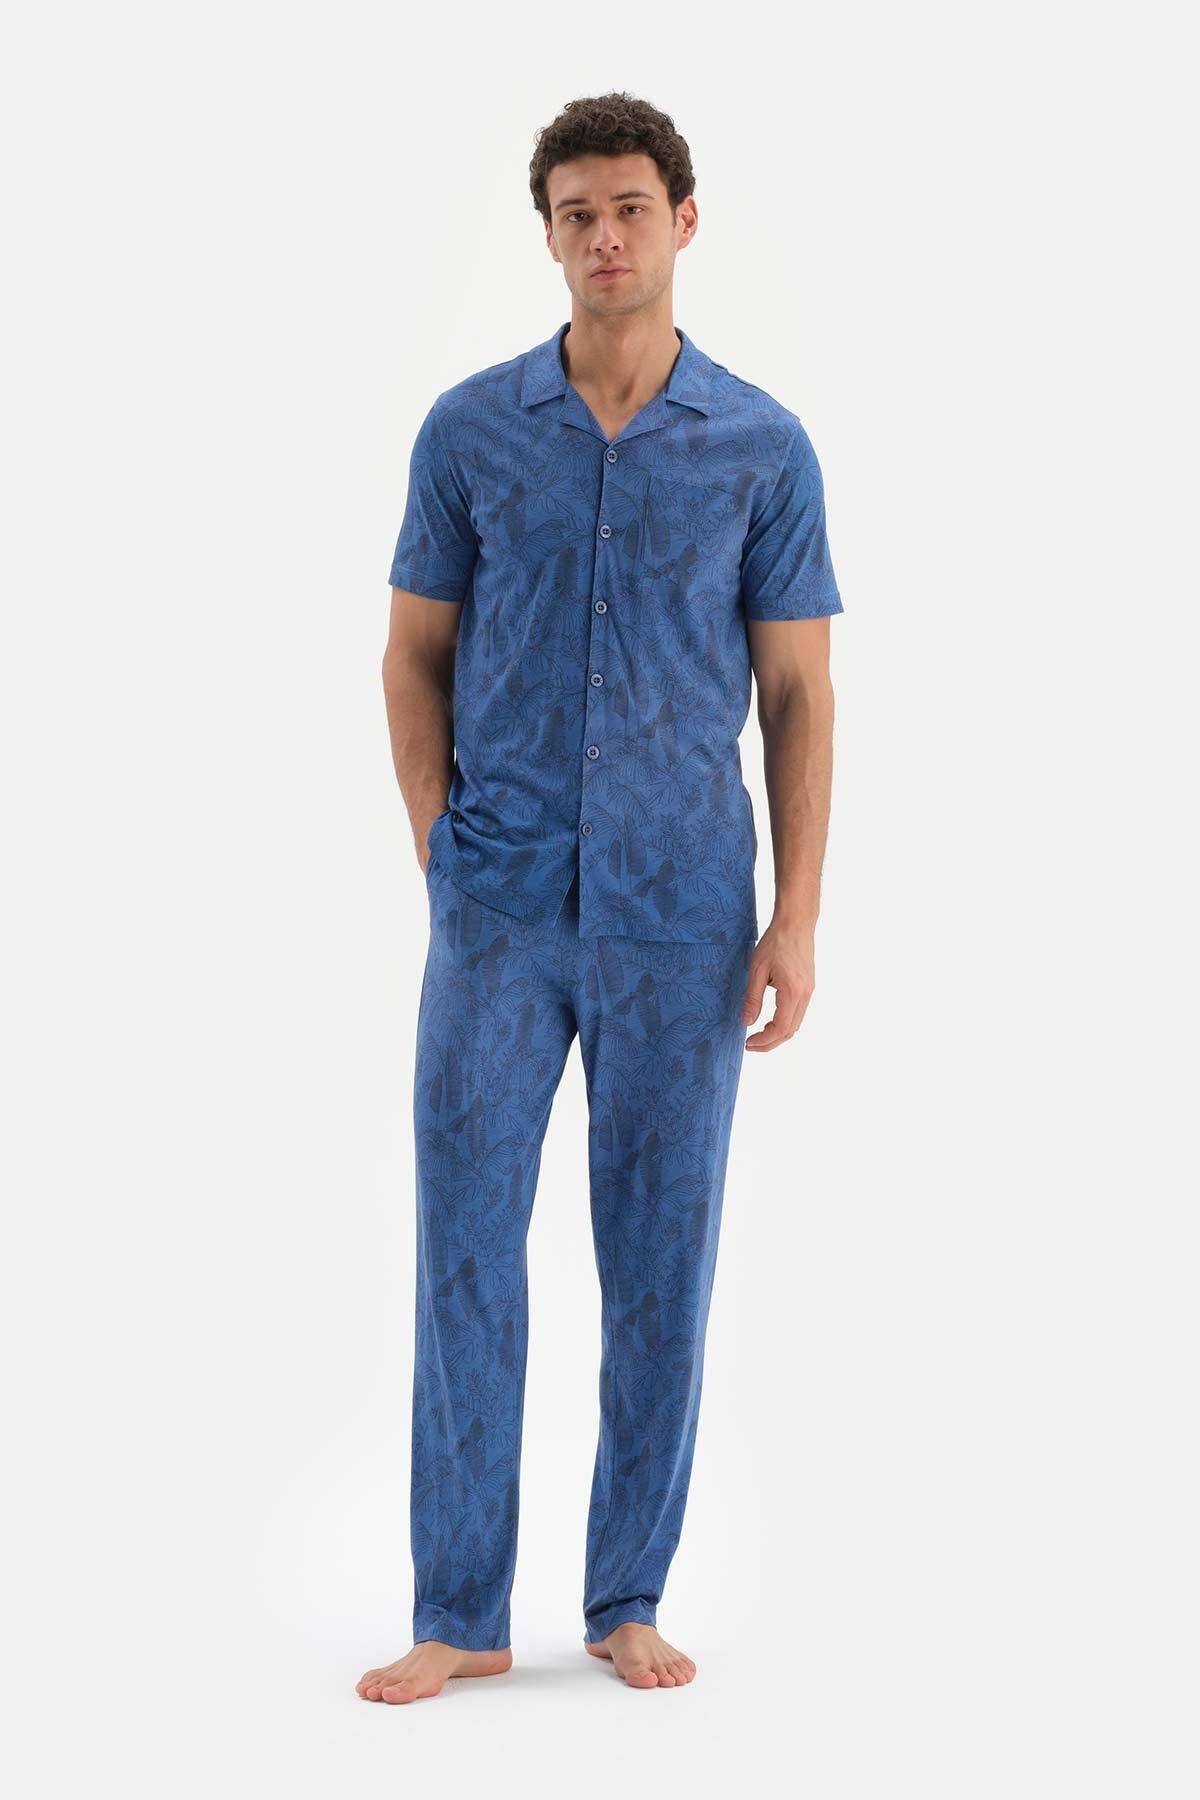 Dagi Blue Shirt Collar Size Printed Cotton Modal Pajamas Set